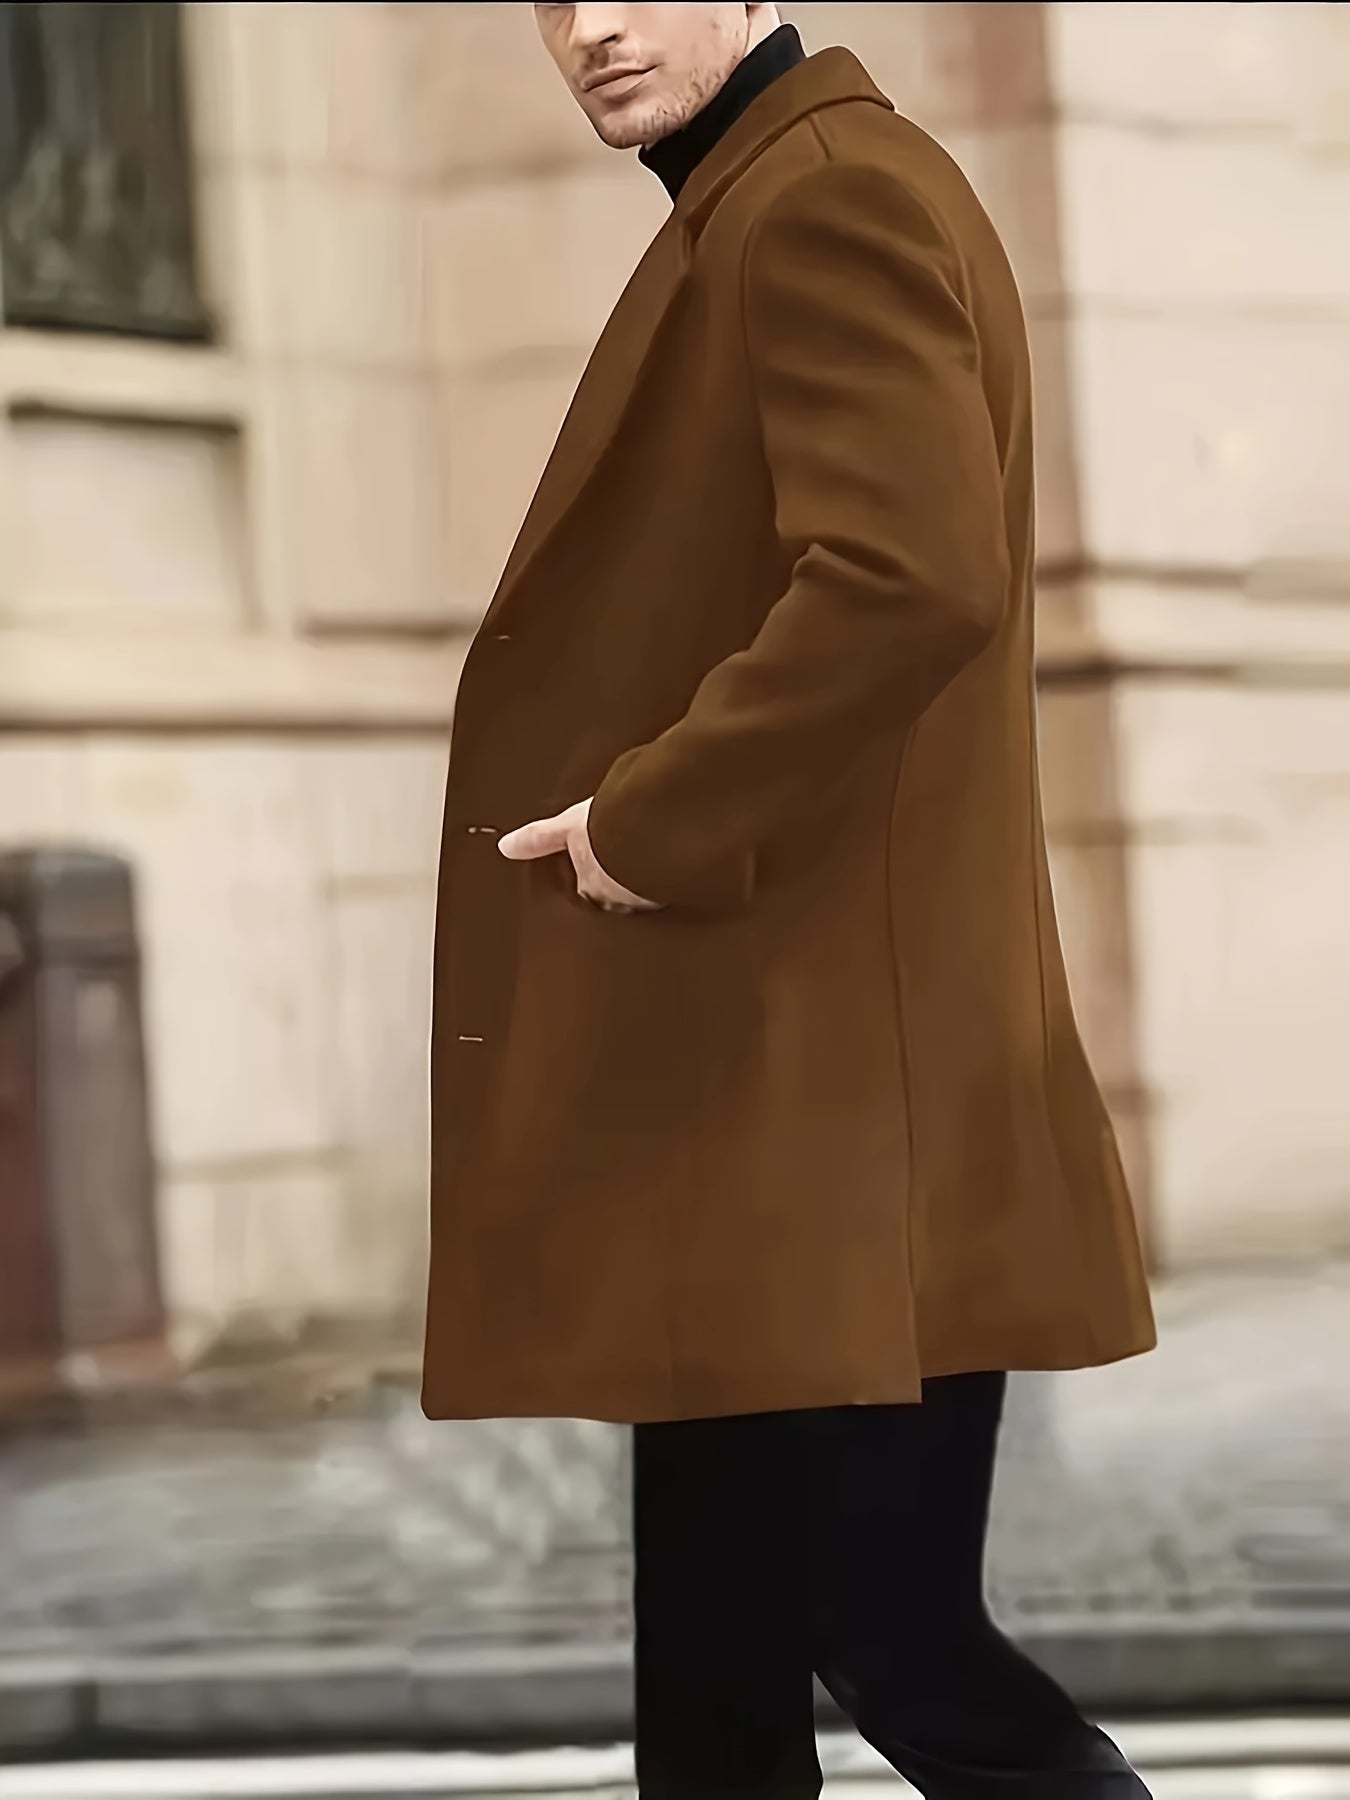 Foruwish - Elegant Retro Trench Coat, Men's Semi-formal Single Breasted Lapel Overcoat For Fall Winter Business